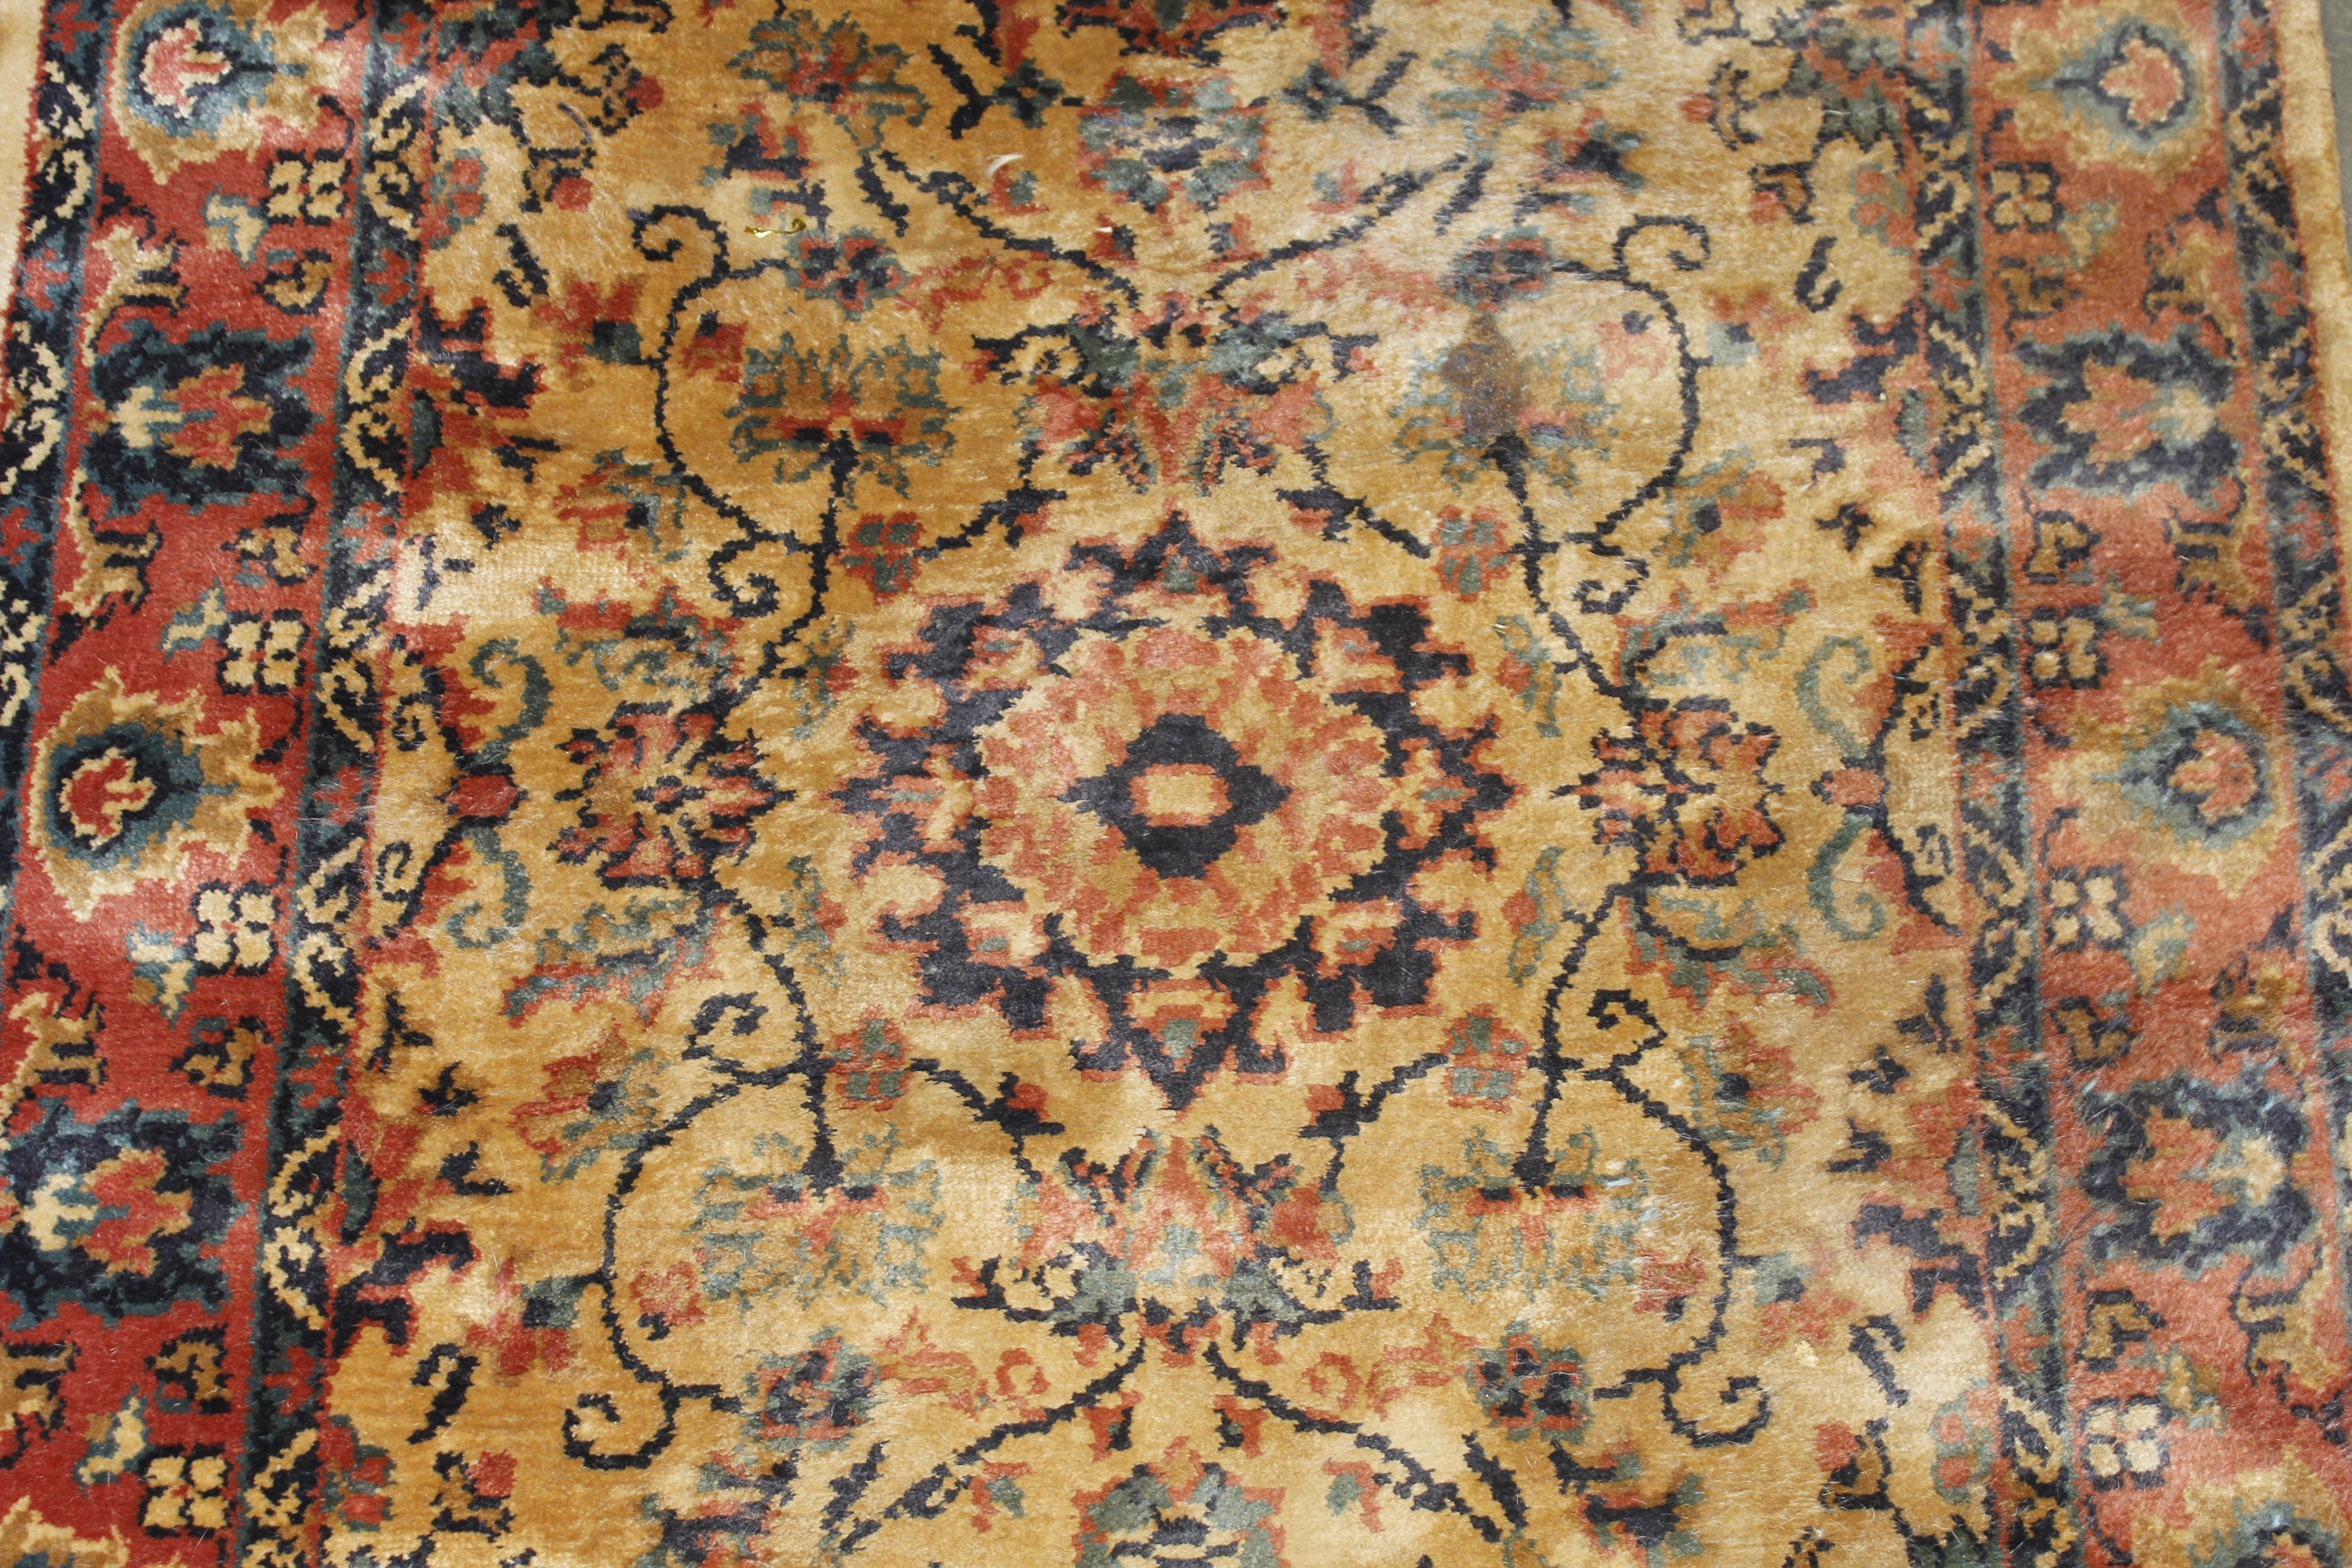 An approx. 5'3" x 3' floral patterned rug AF - Image 2 of 6